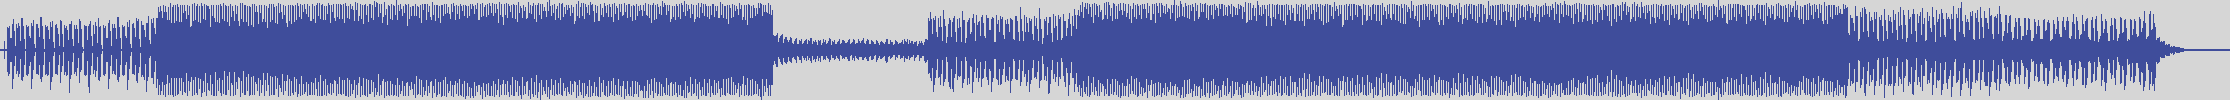 nf_boyz_records [NFY004] Xavier Fairley - Wine Dance [Ioto Koyo's House Mix] audio wave form